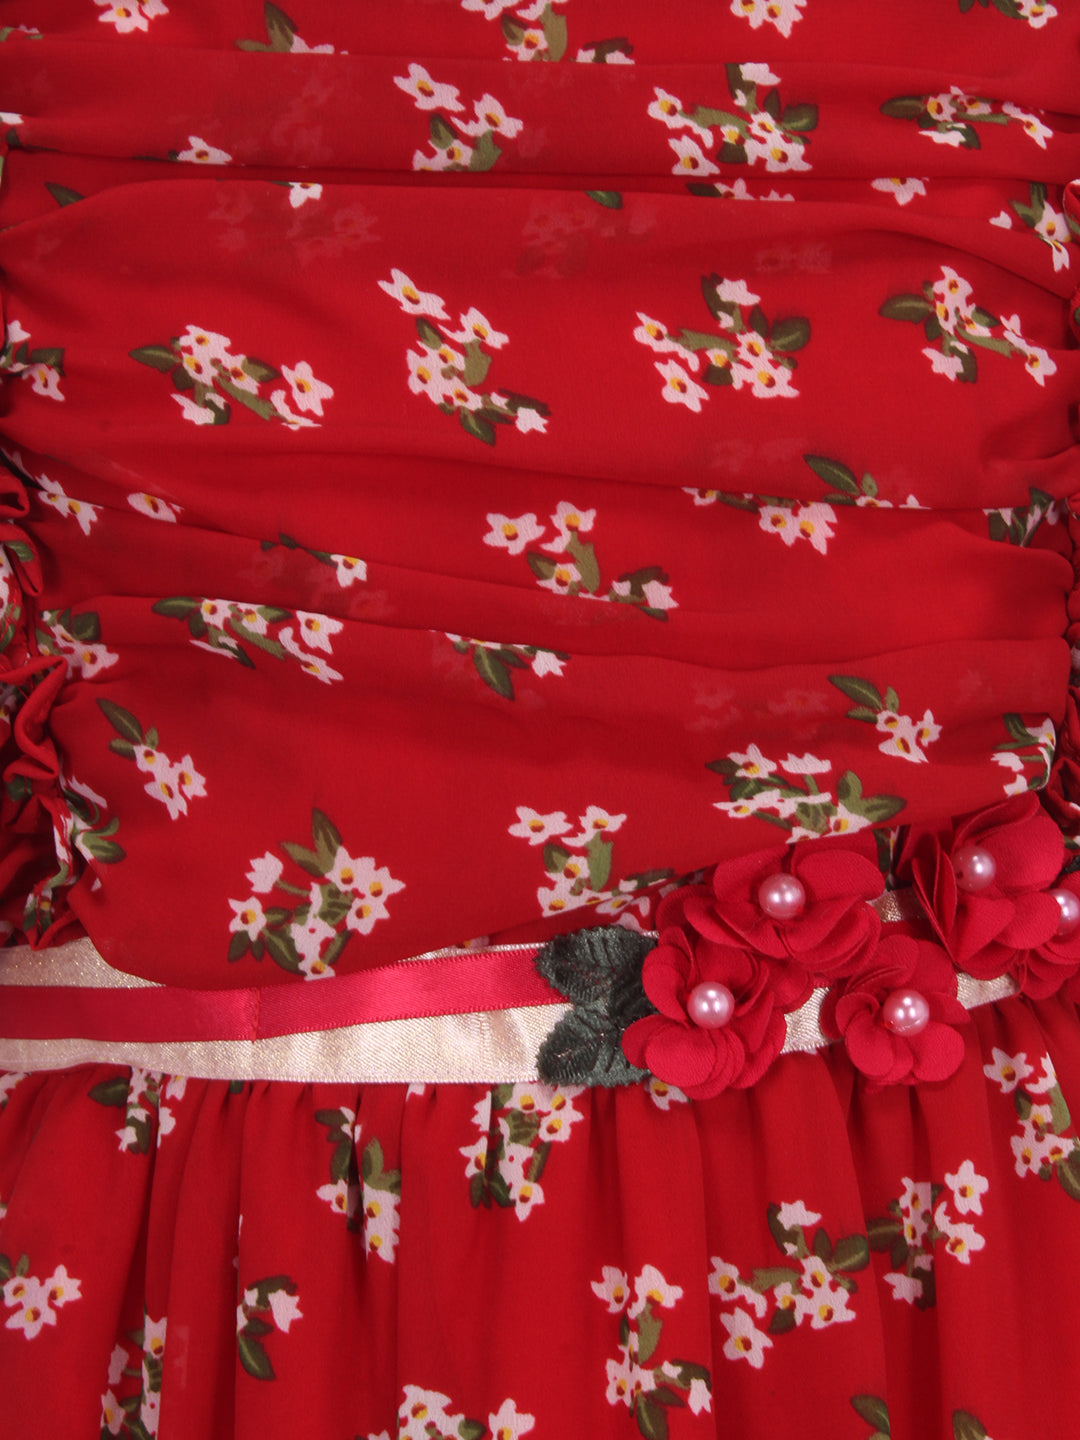 Girls Midi/Knee Length Casual Dress  (Red, Fashion Sleeve)